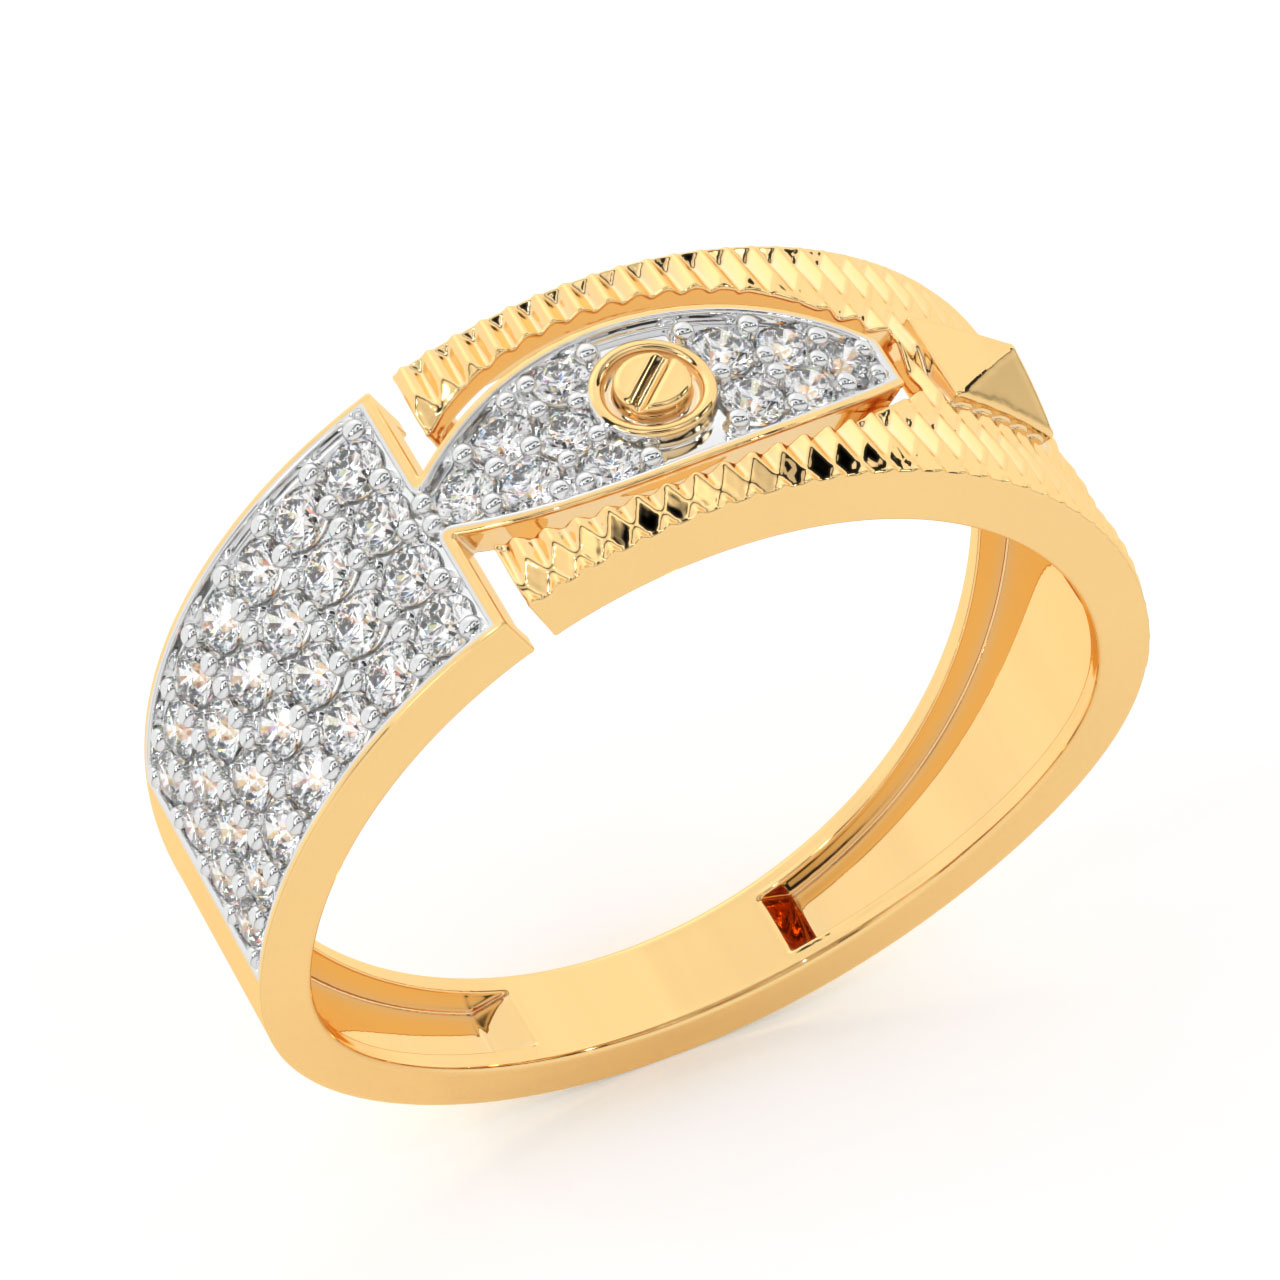 Oscar Round Diamond Ring For Men